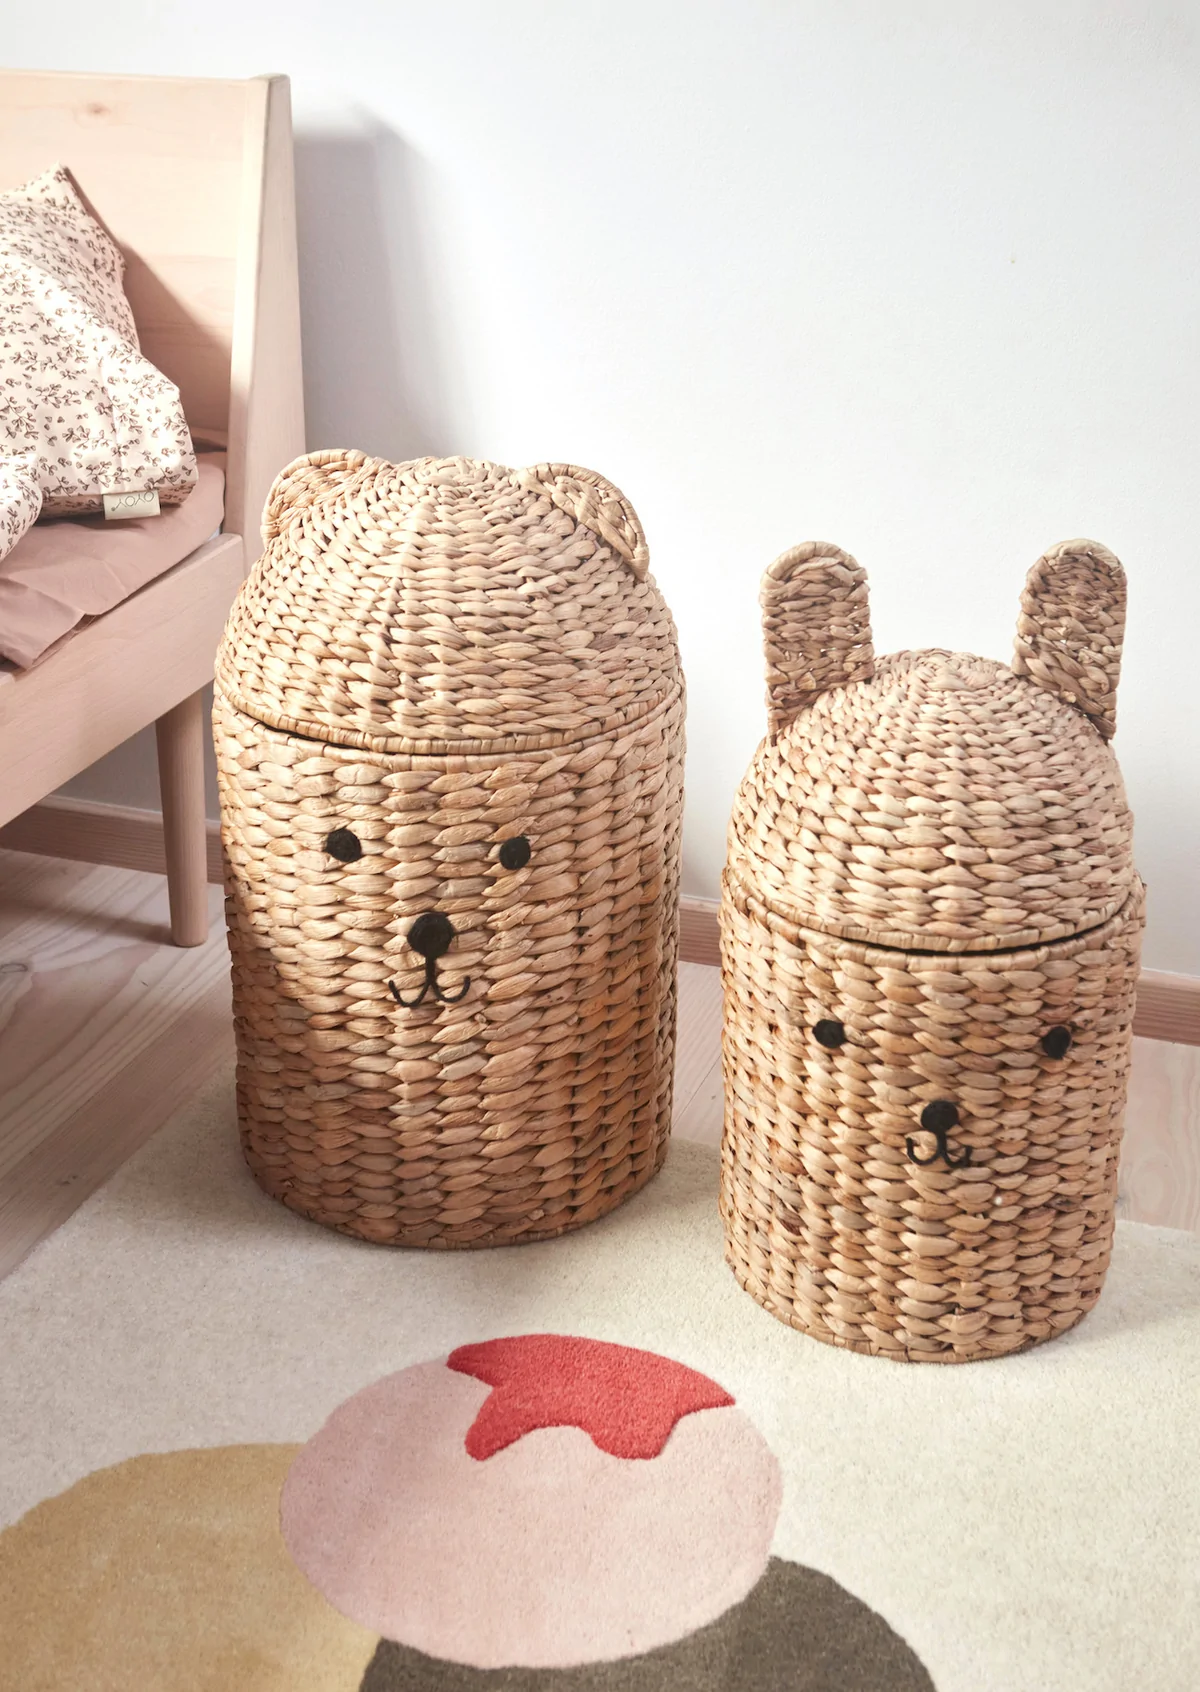 Bear and rabbit storage baskets